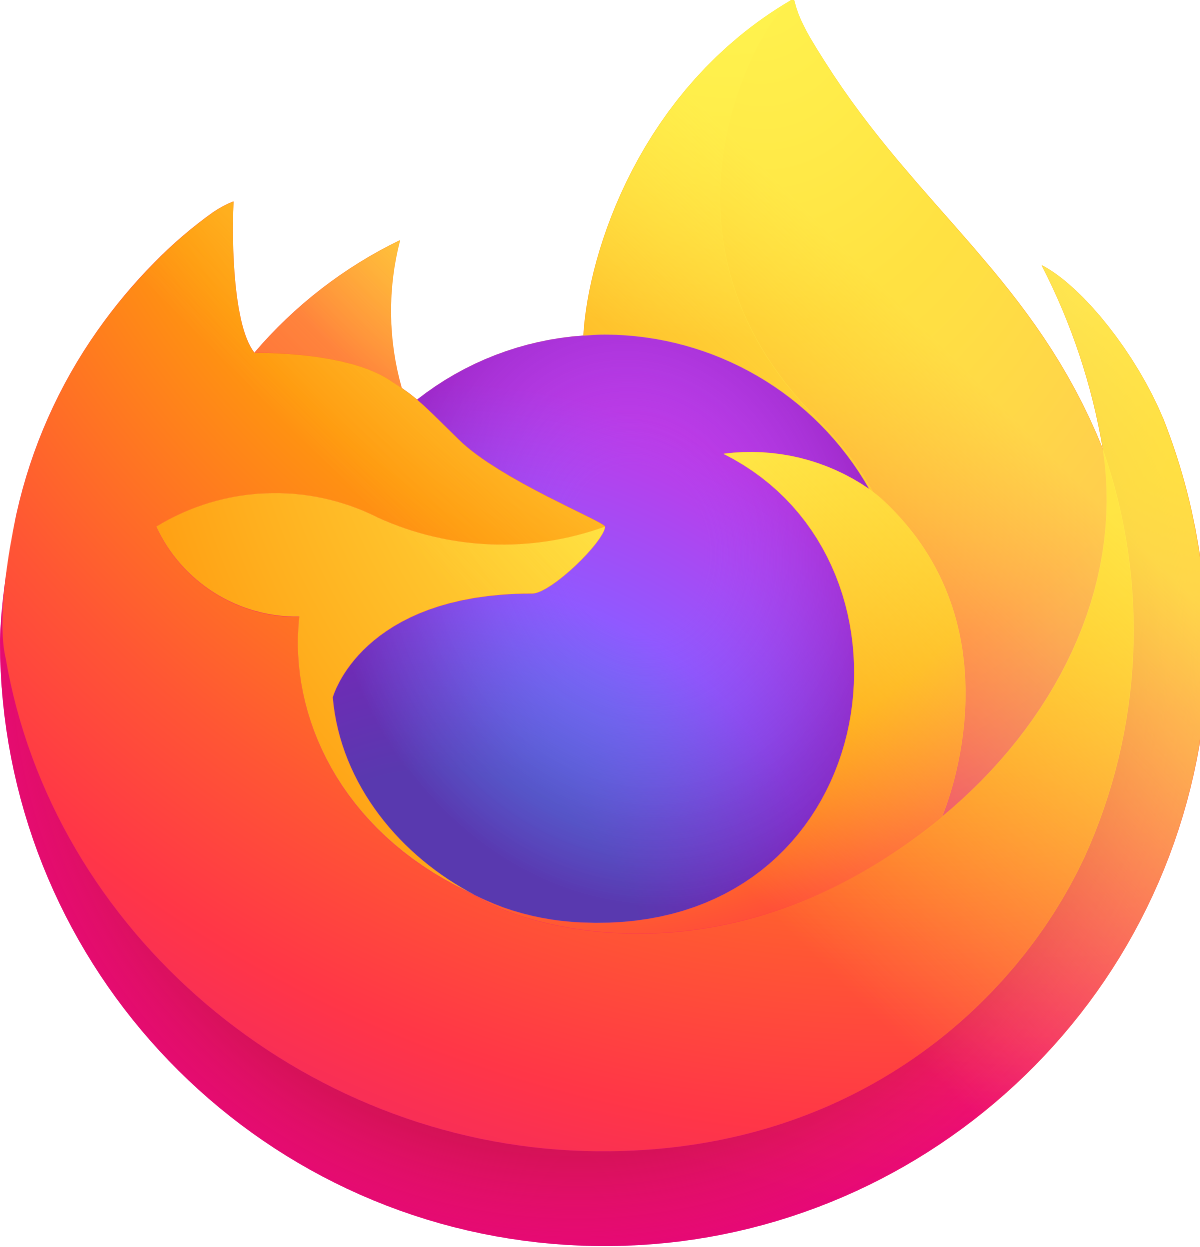 advanced mac cleaner pop up firefox update